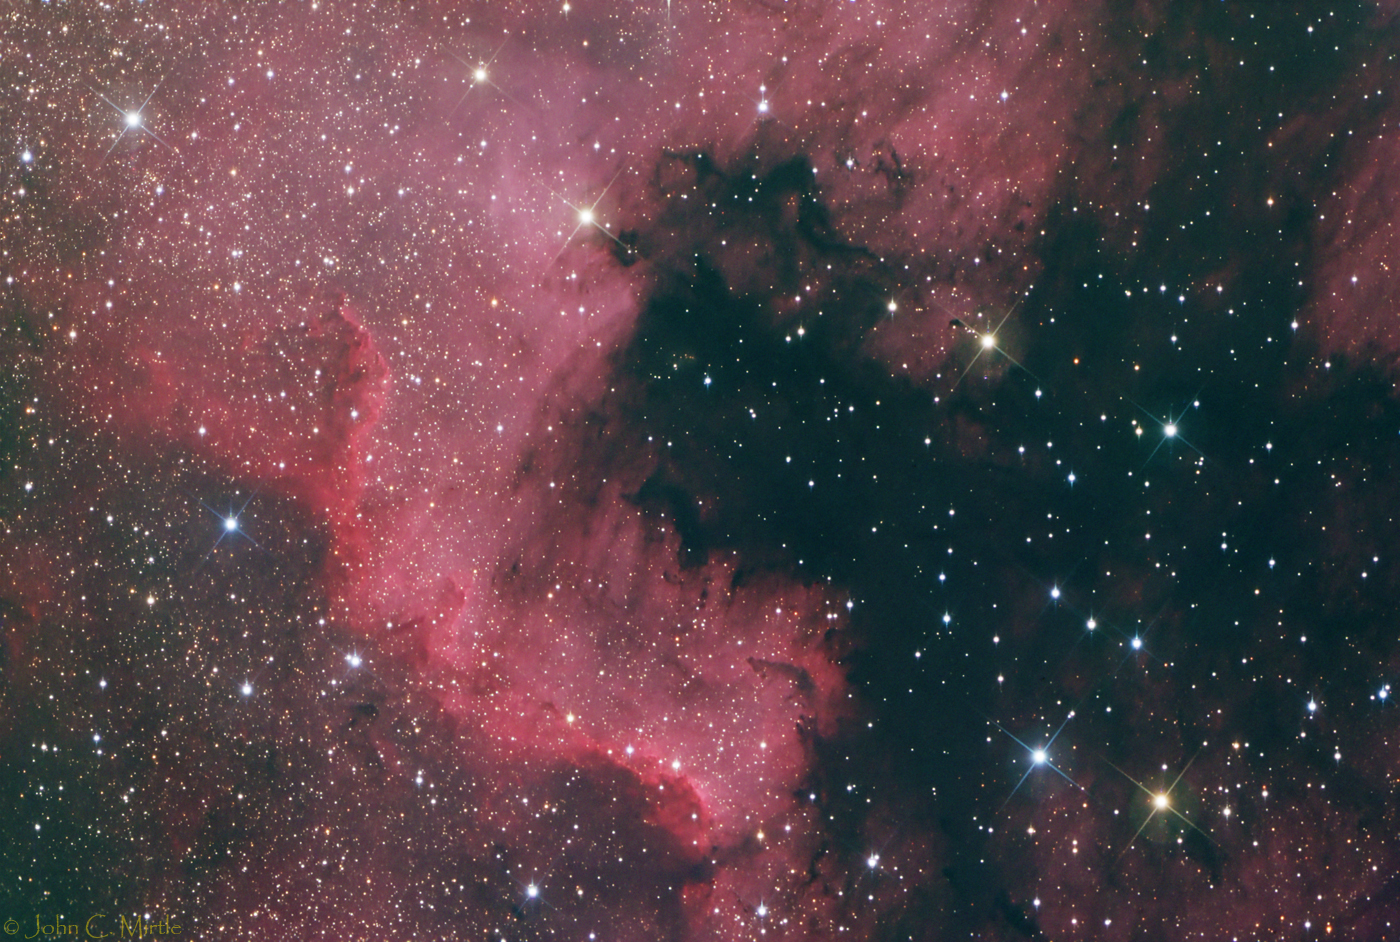 North America Nebula in Cygnus